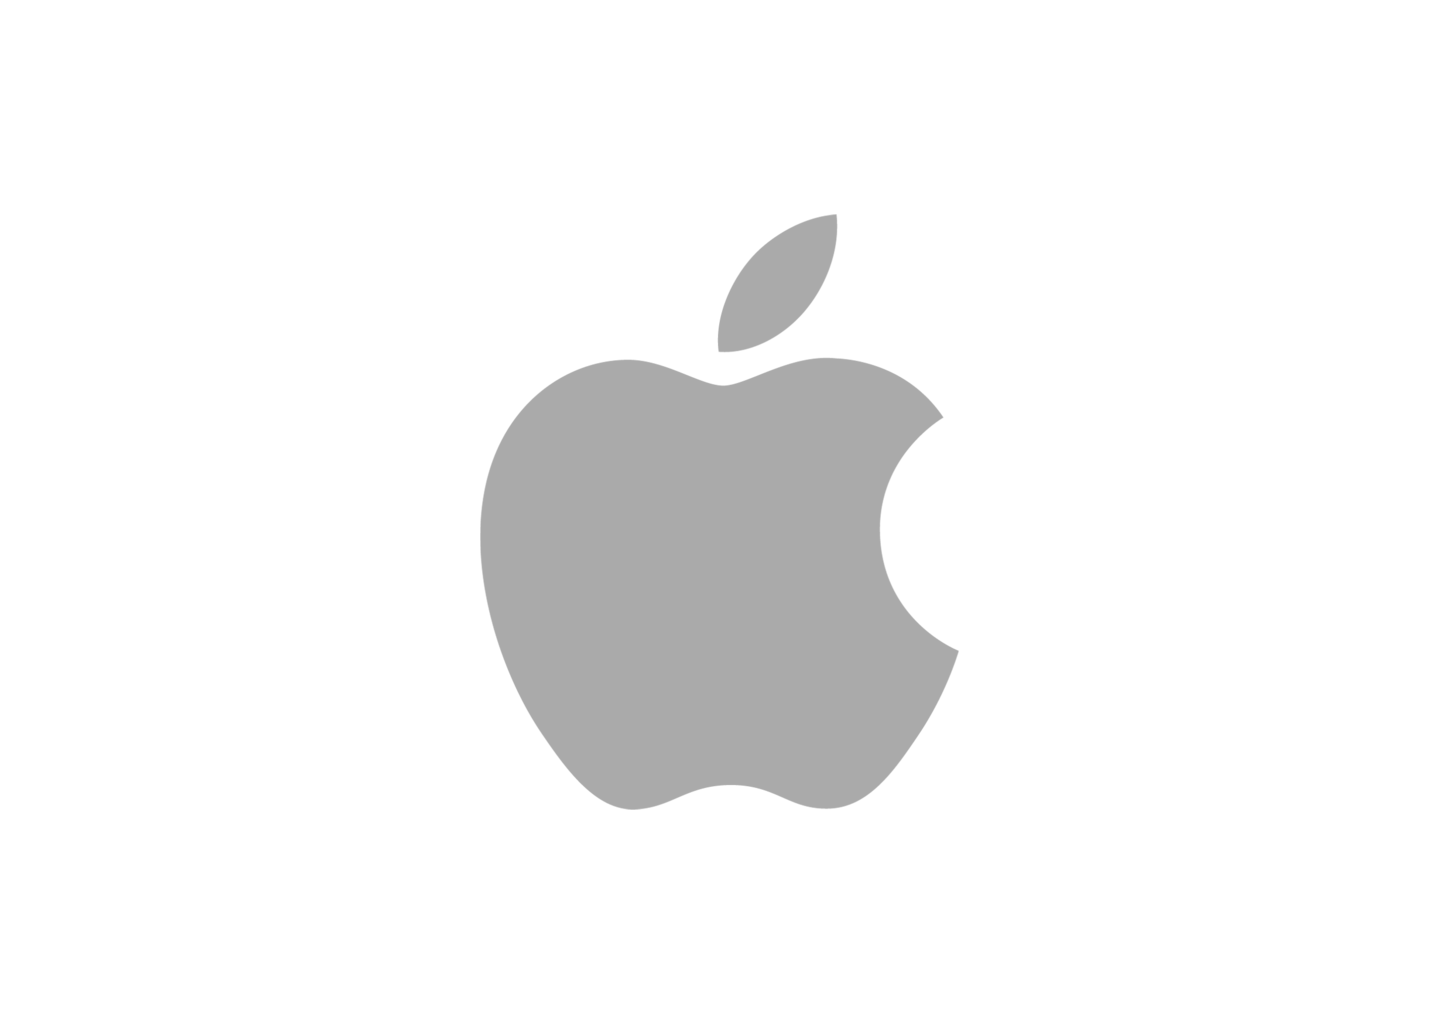 apple logo.png